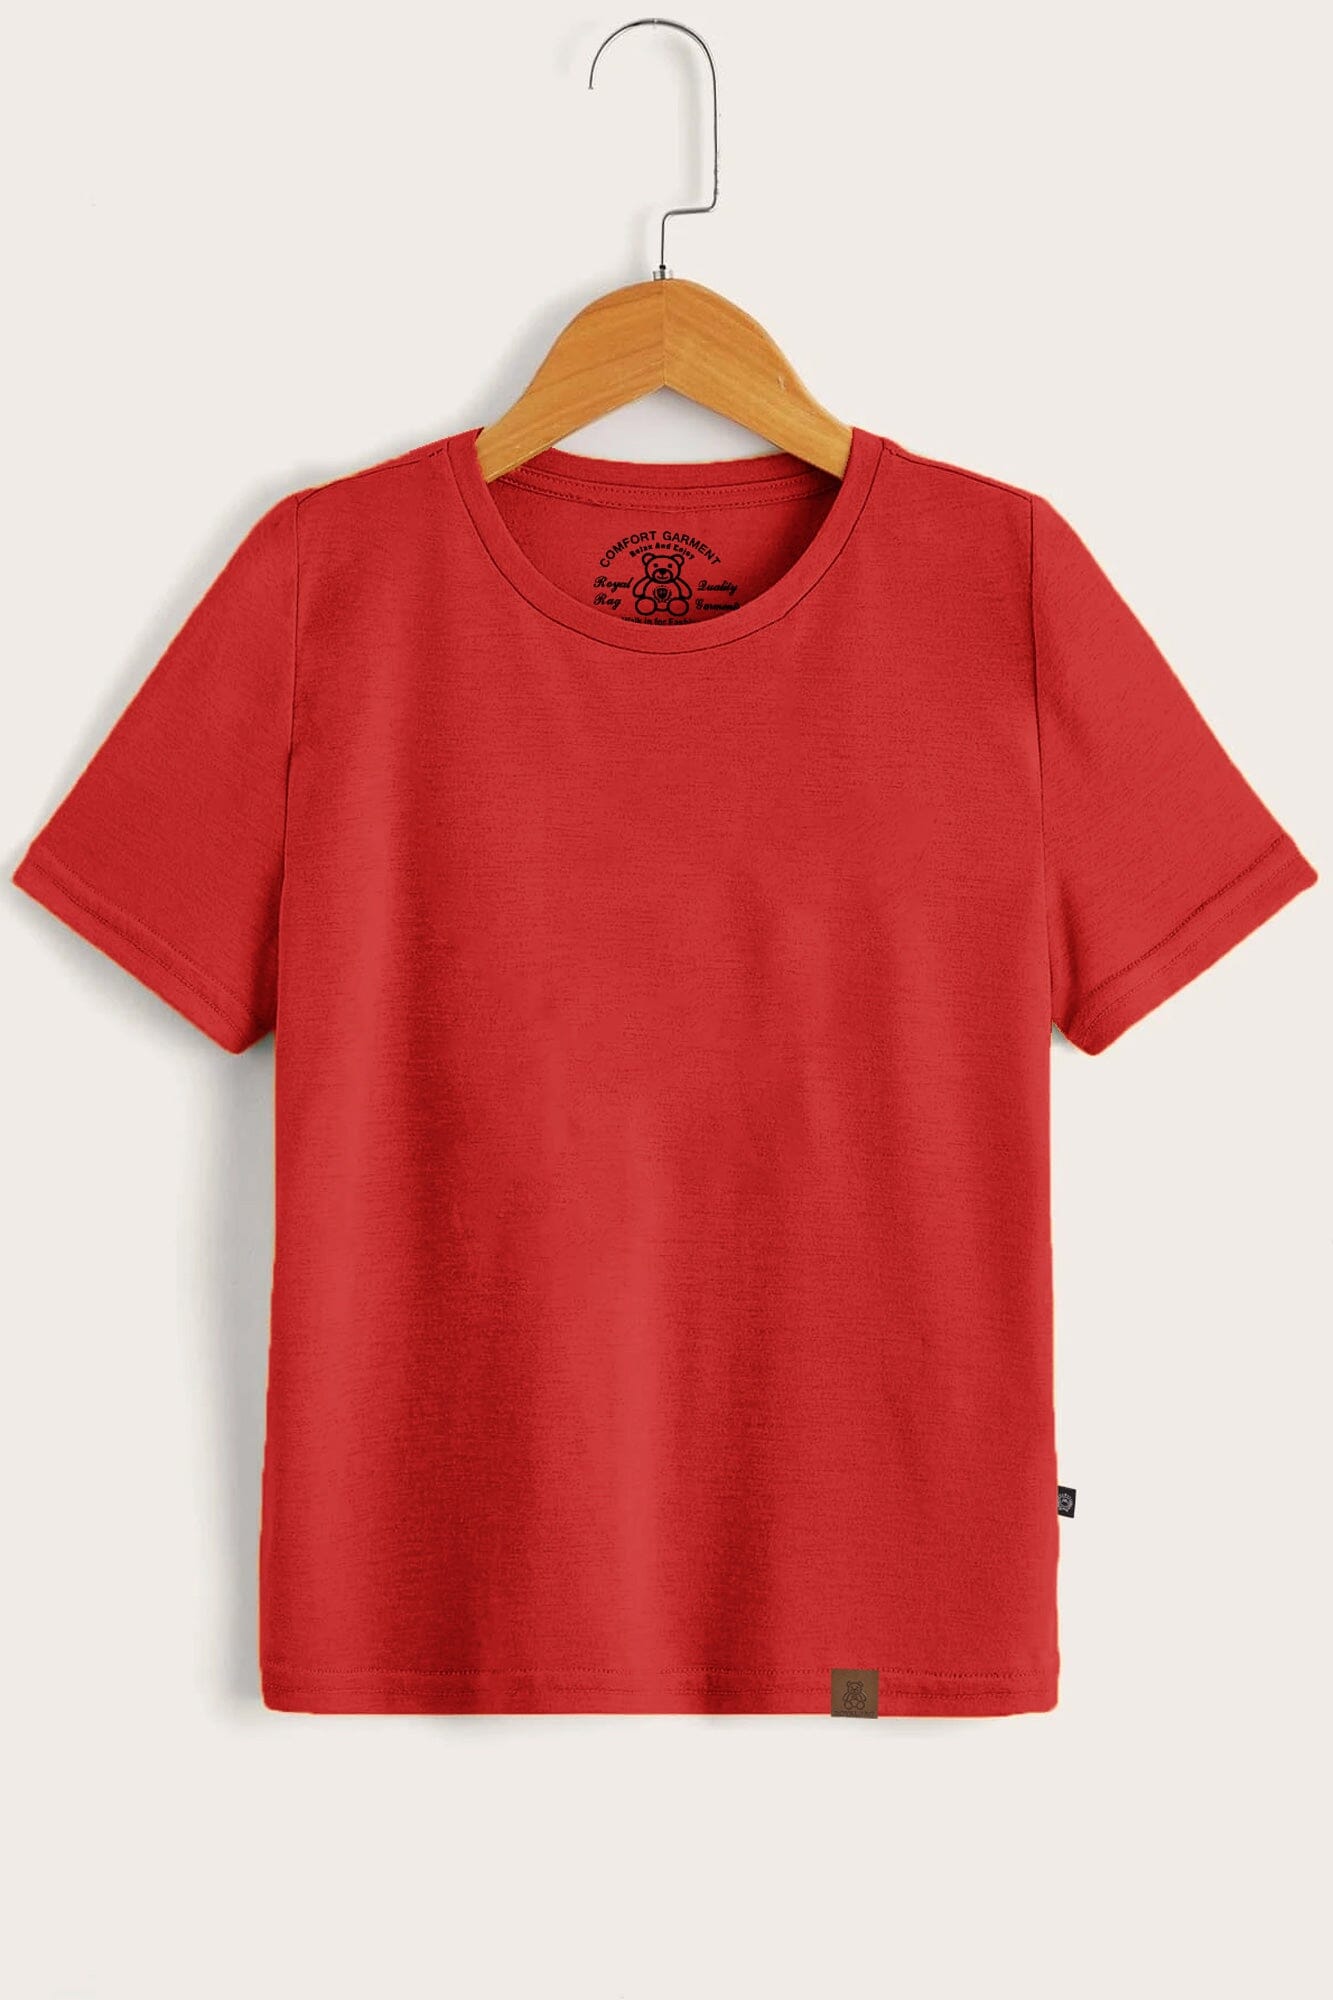 RR Comfort Kid's Solid Design Short Sleeve Tee Shirt Boy's Tee Shirt Usman Traders Red 2-3 Years 